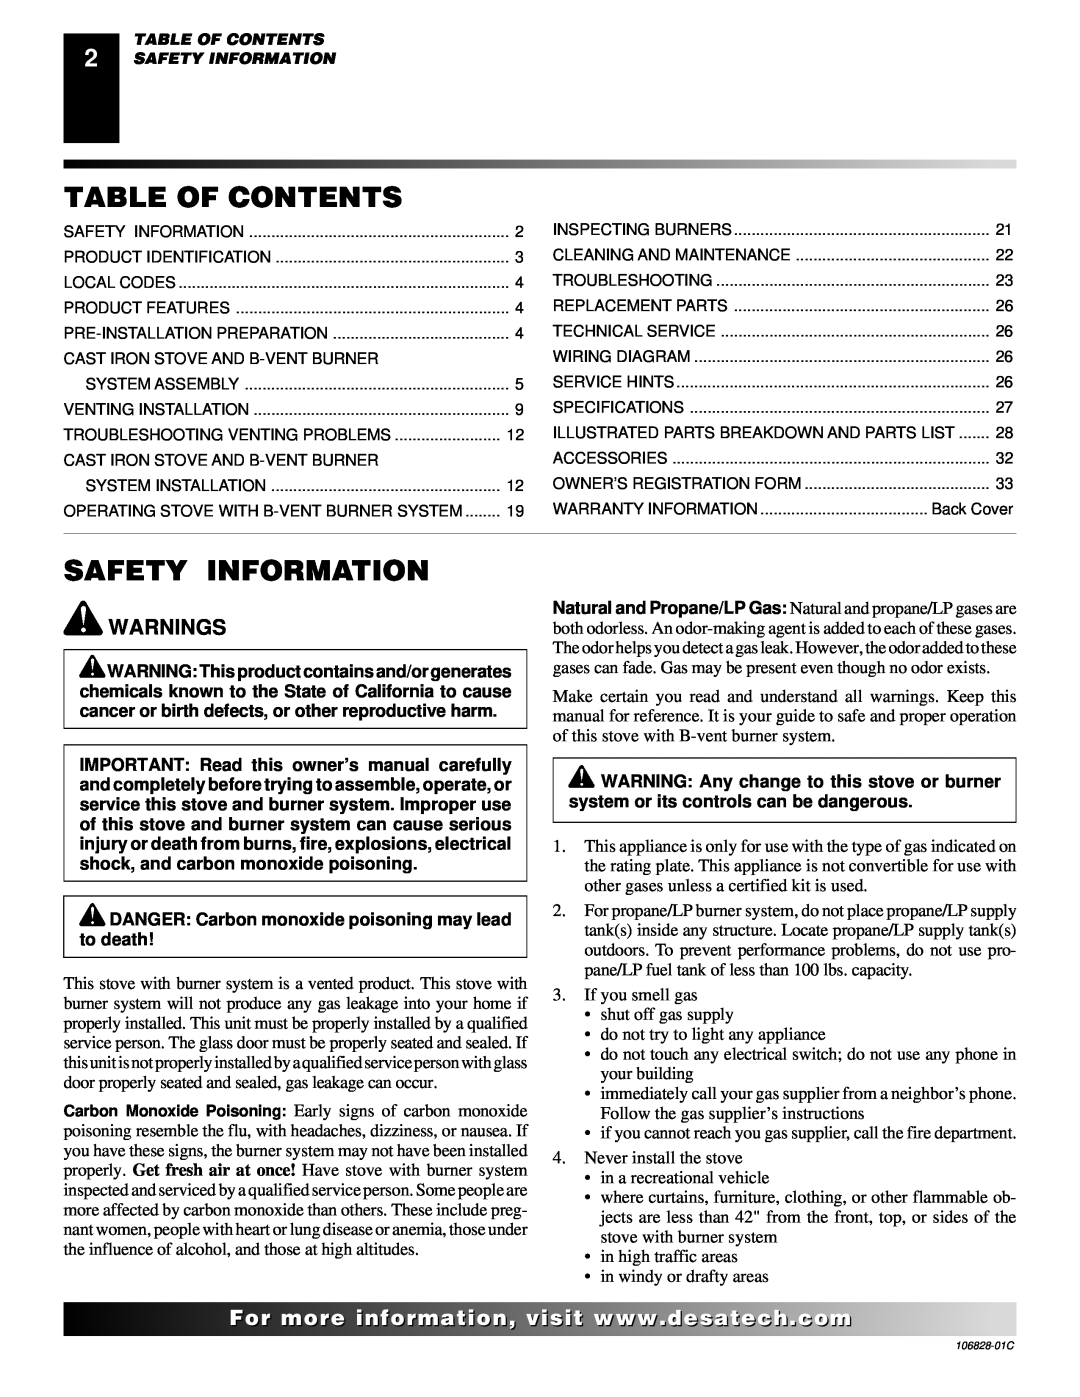 Desa SBVBN(C), SBVBP(C) installation manual Table Of Contents, Safety Information, Warnings, For..com 